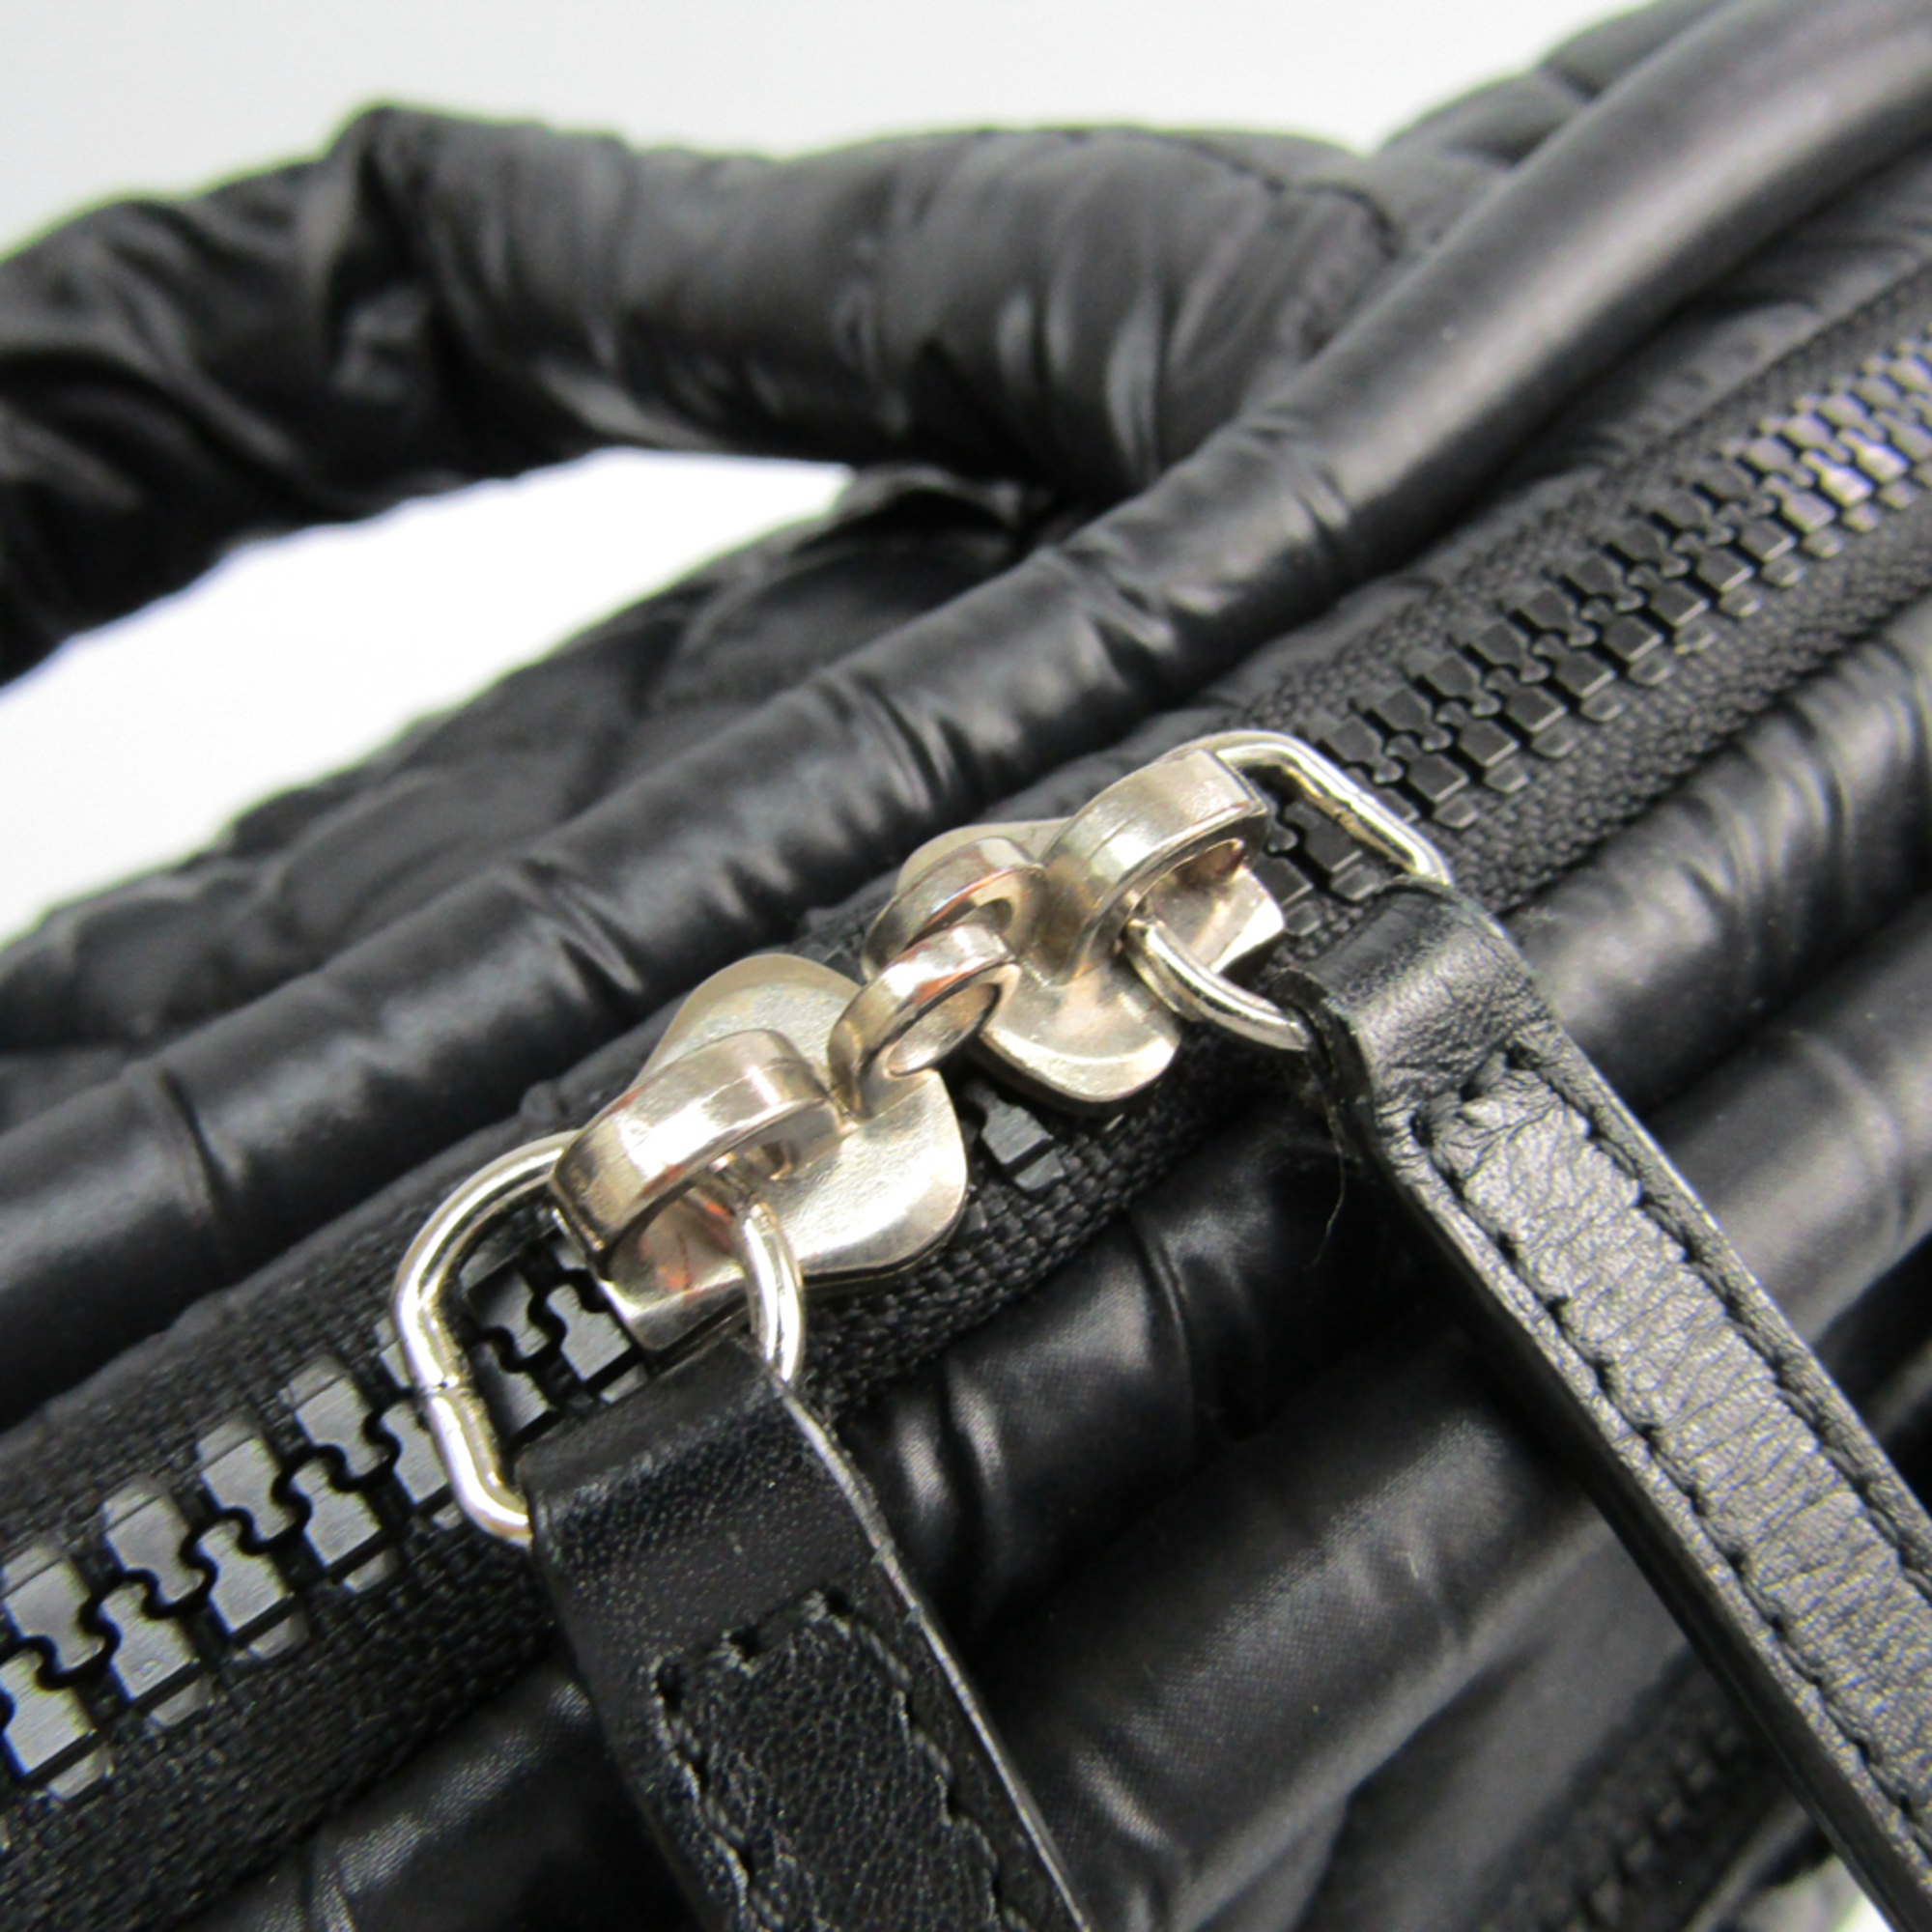 Chanel Coco Cocoon Quilting Women's Nylon,Leather Boston Bag,Handbag Black